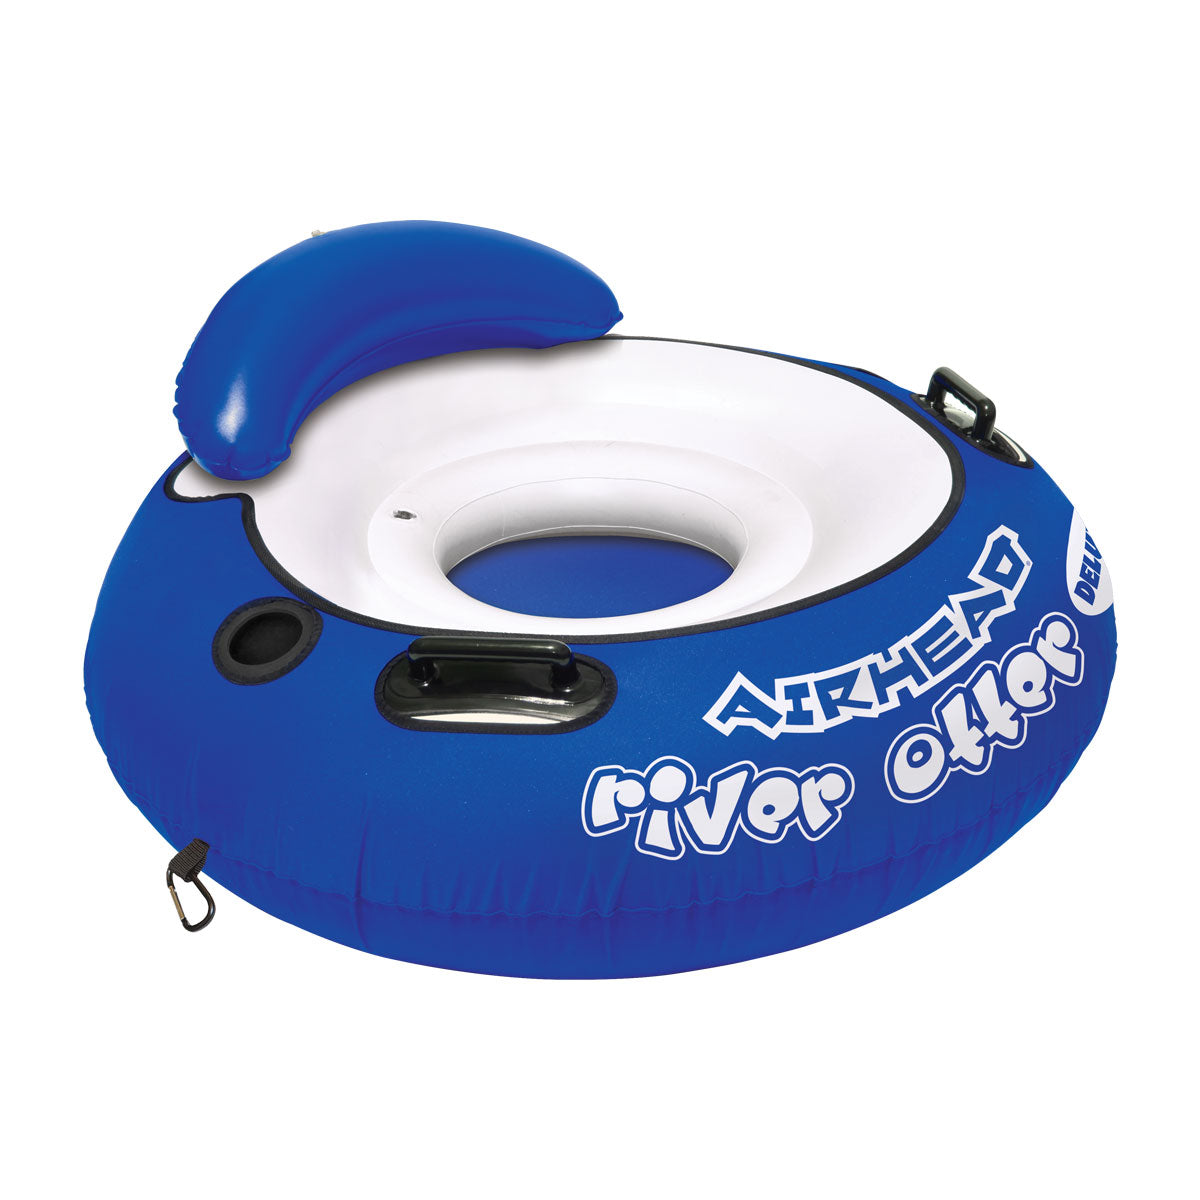 Airhead Deluxe River Otter Tube